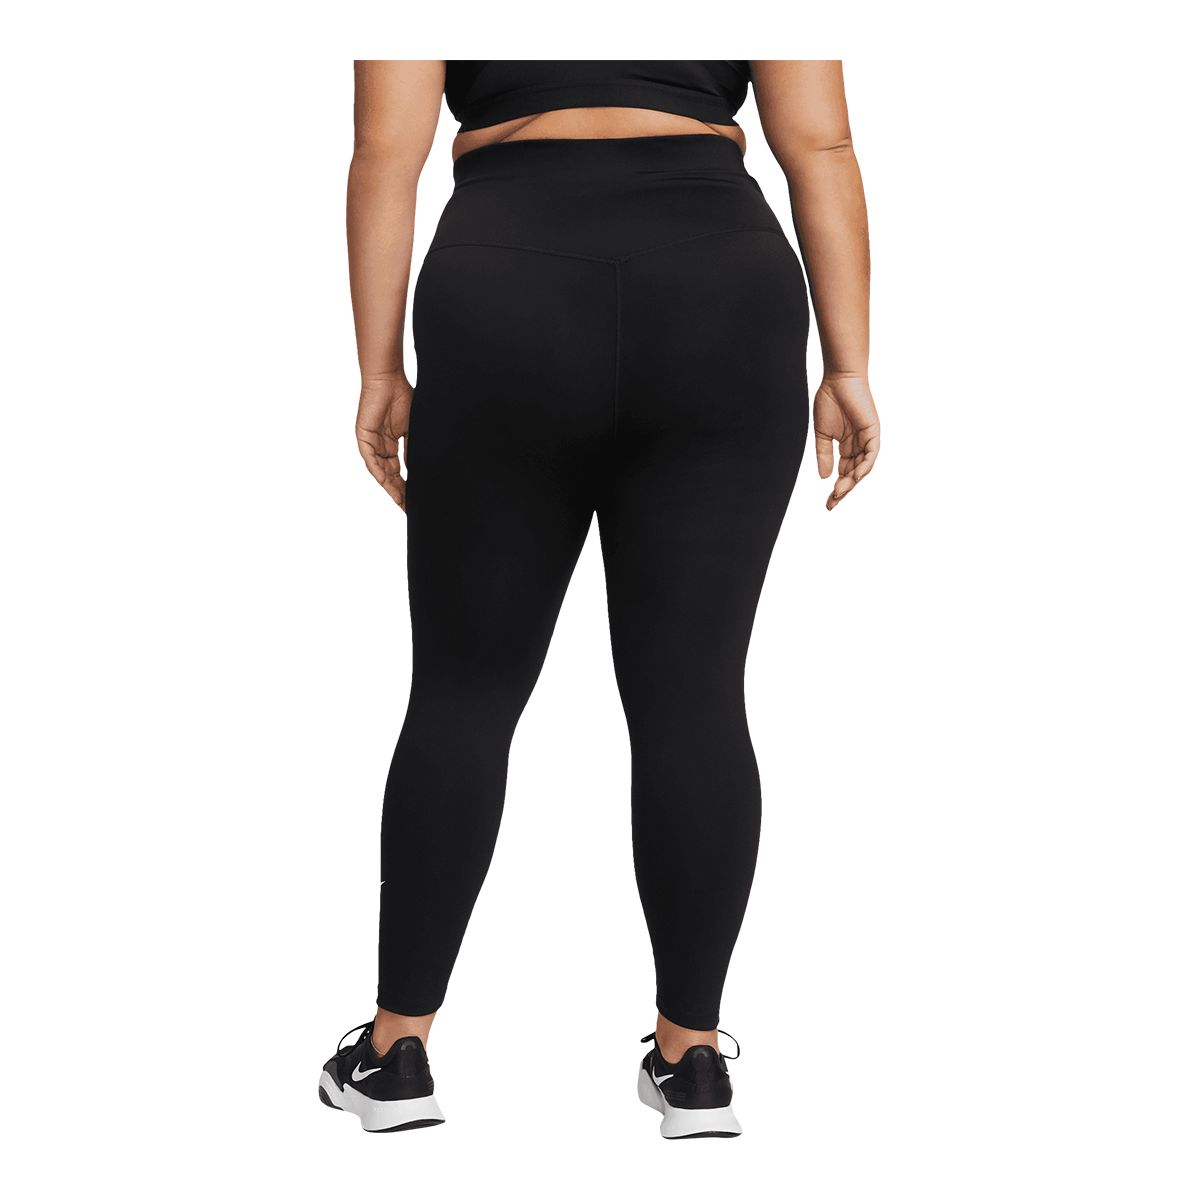 Nike Women's Black Gold Just Do It High Rise Leggings Size Medium RRP £44.99